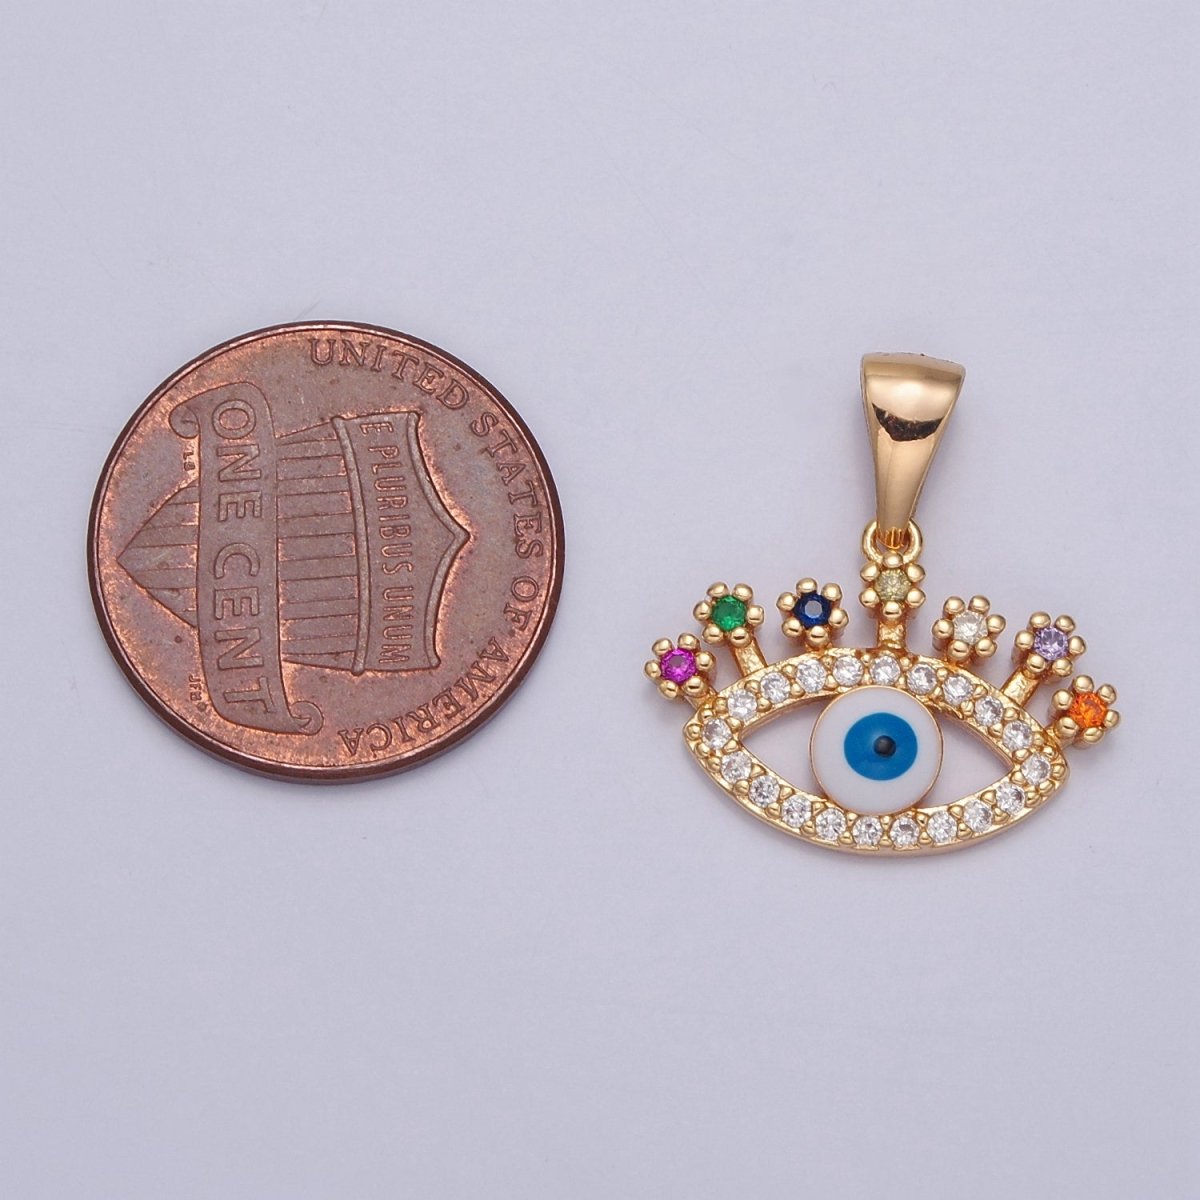 Gold Filed Evil Eye Pendant Gold Eye Pendant Protection Jewelry Amulet Charm J-598 - DLUXCA